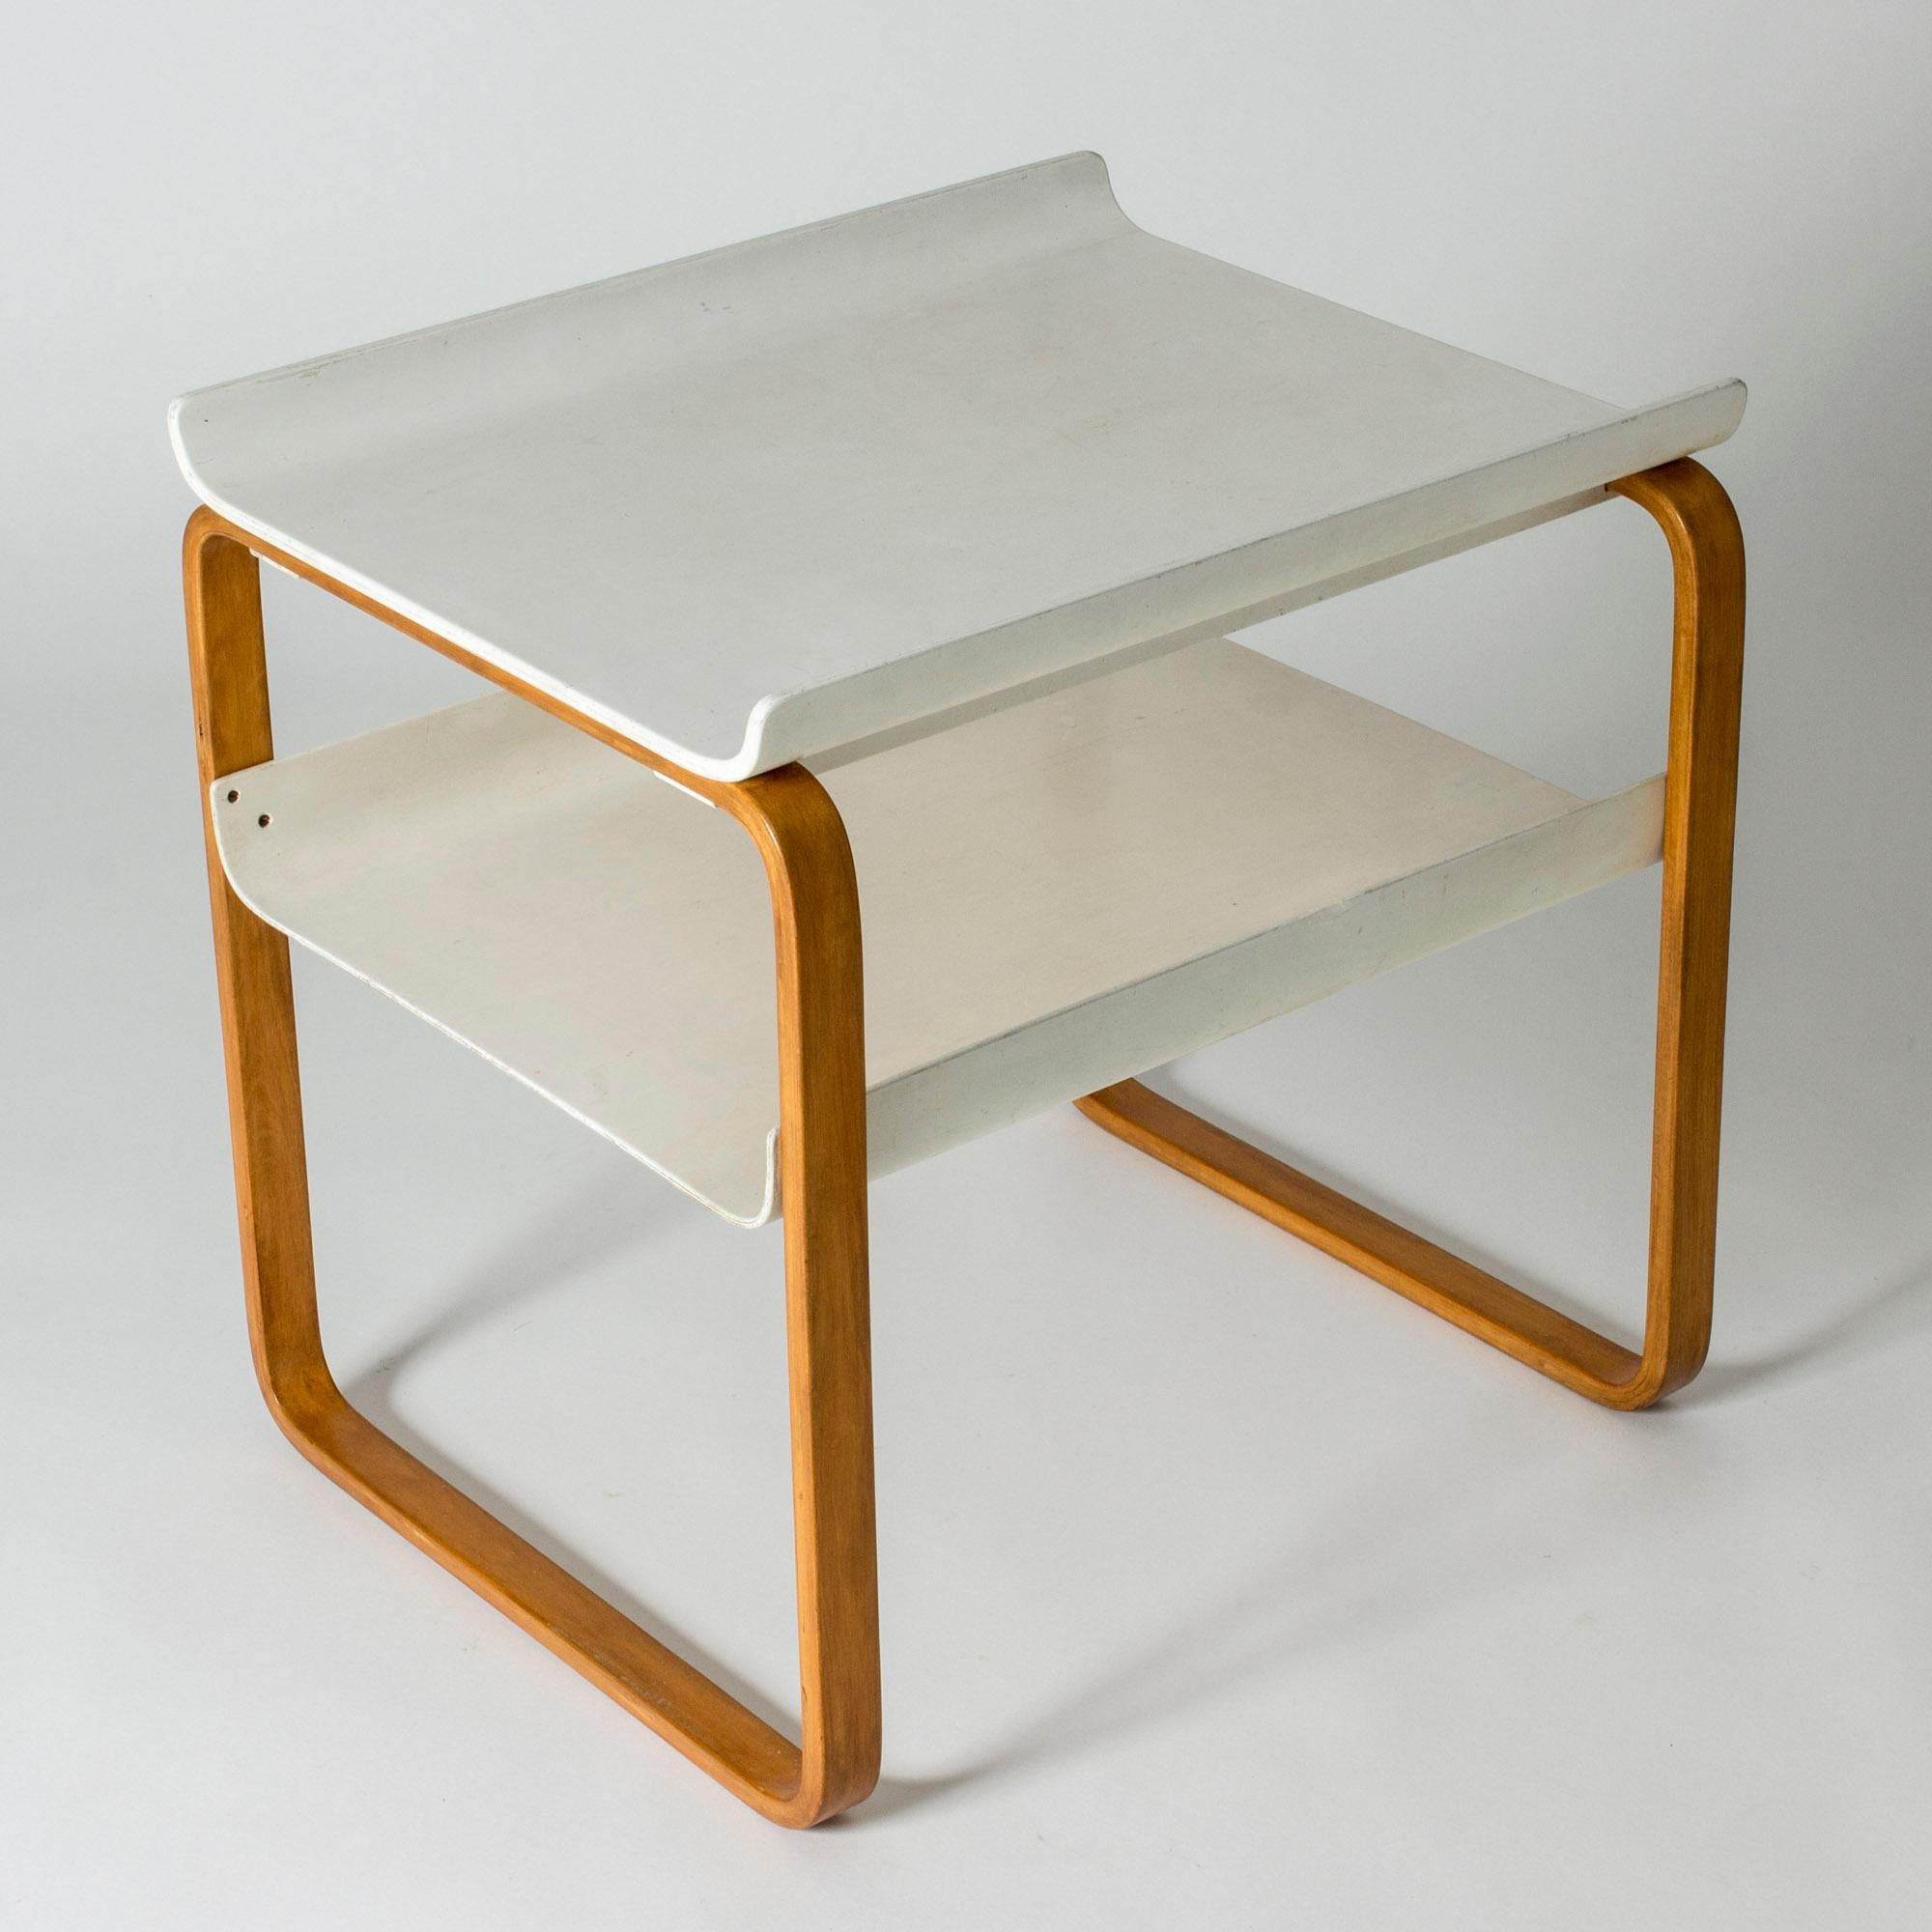 Scandinavian Modern Side Table 915 by Alvar Aalto for Artek, Finland, 1950s